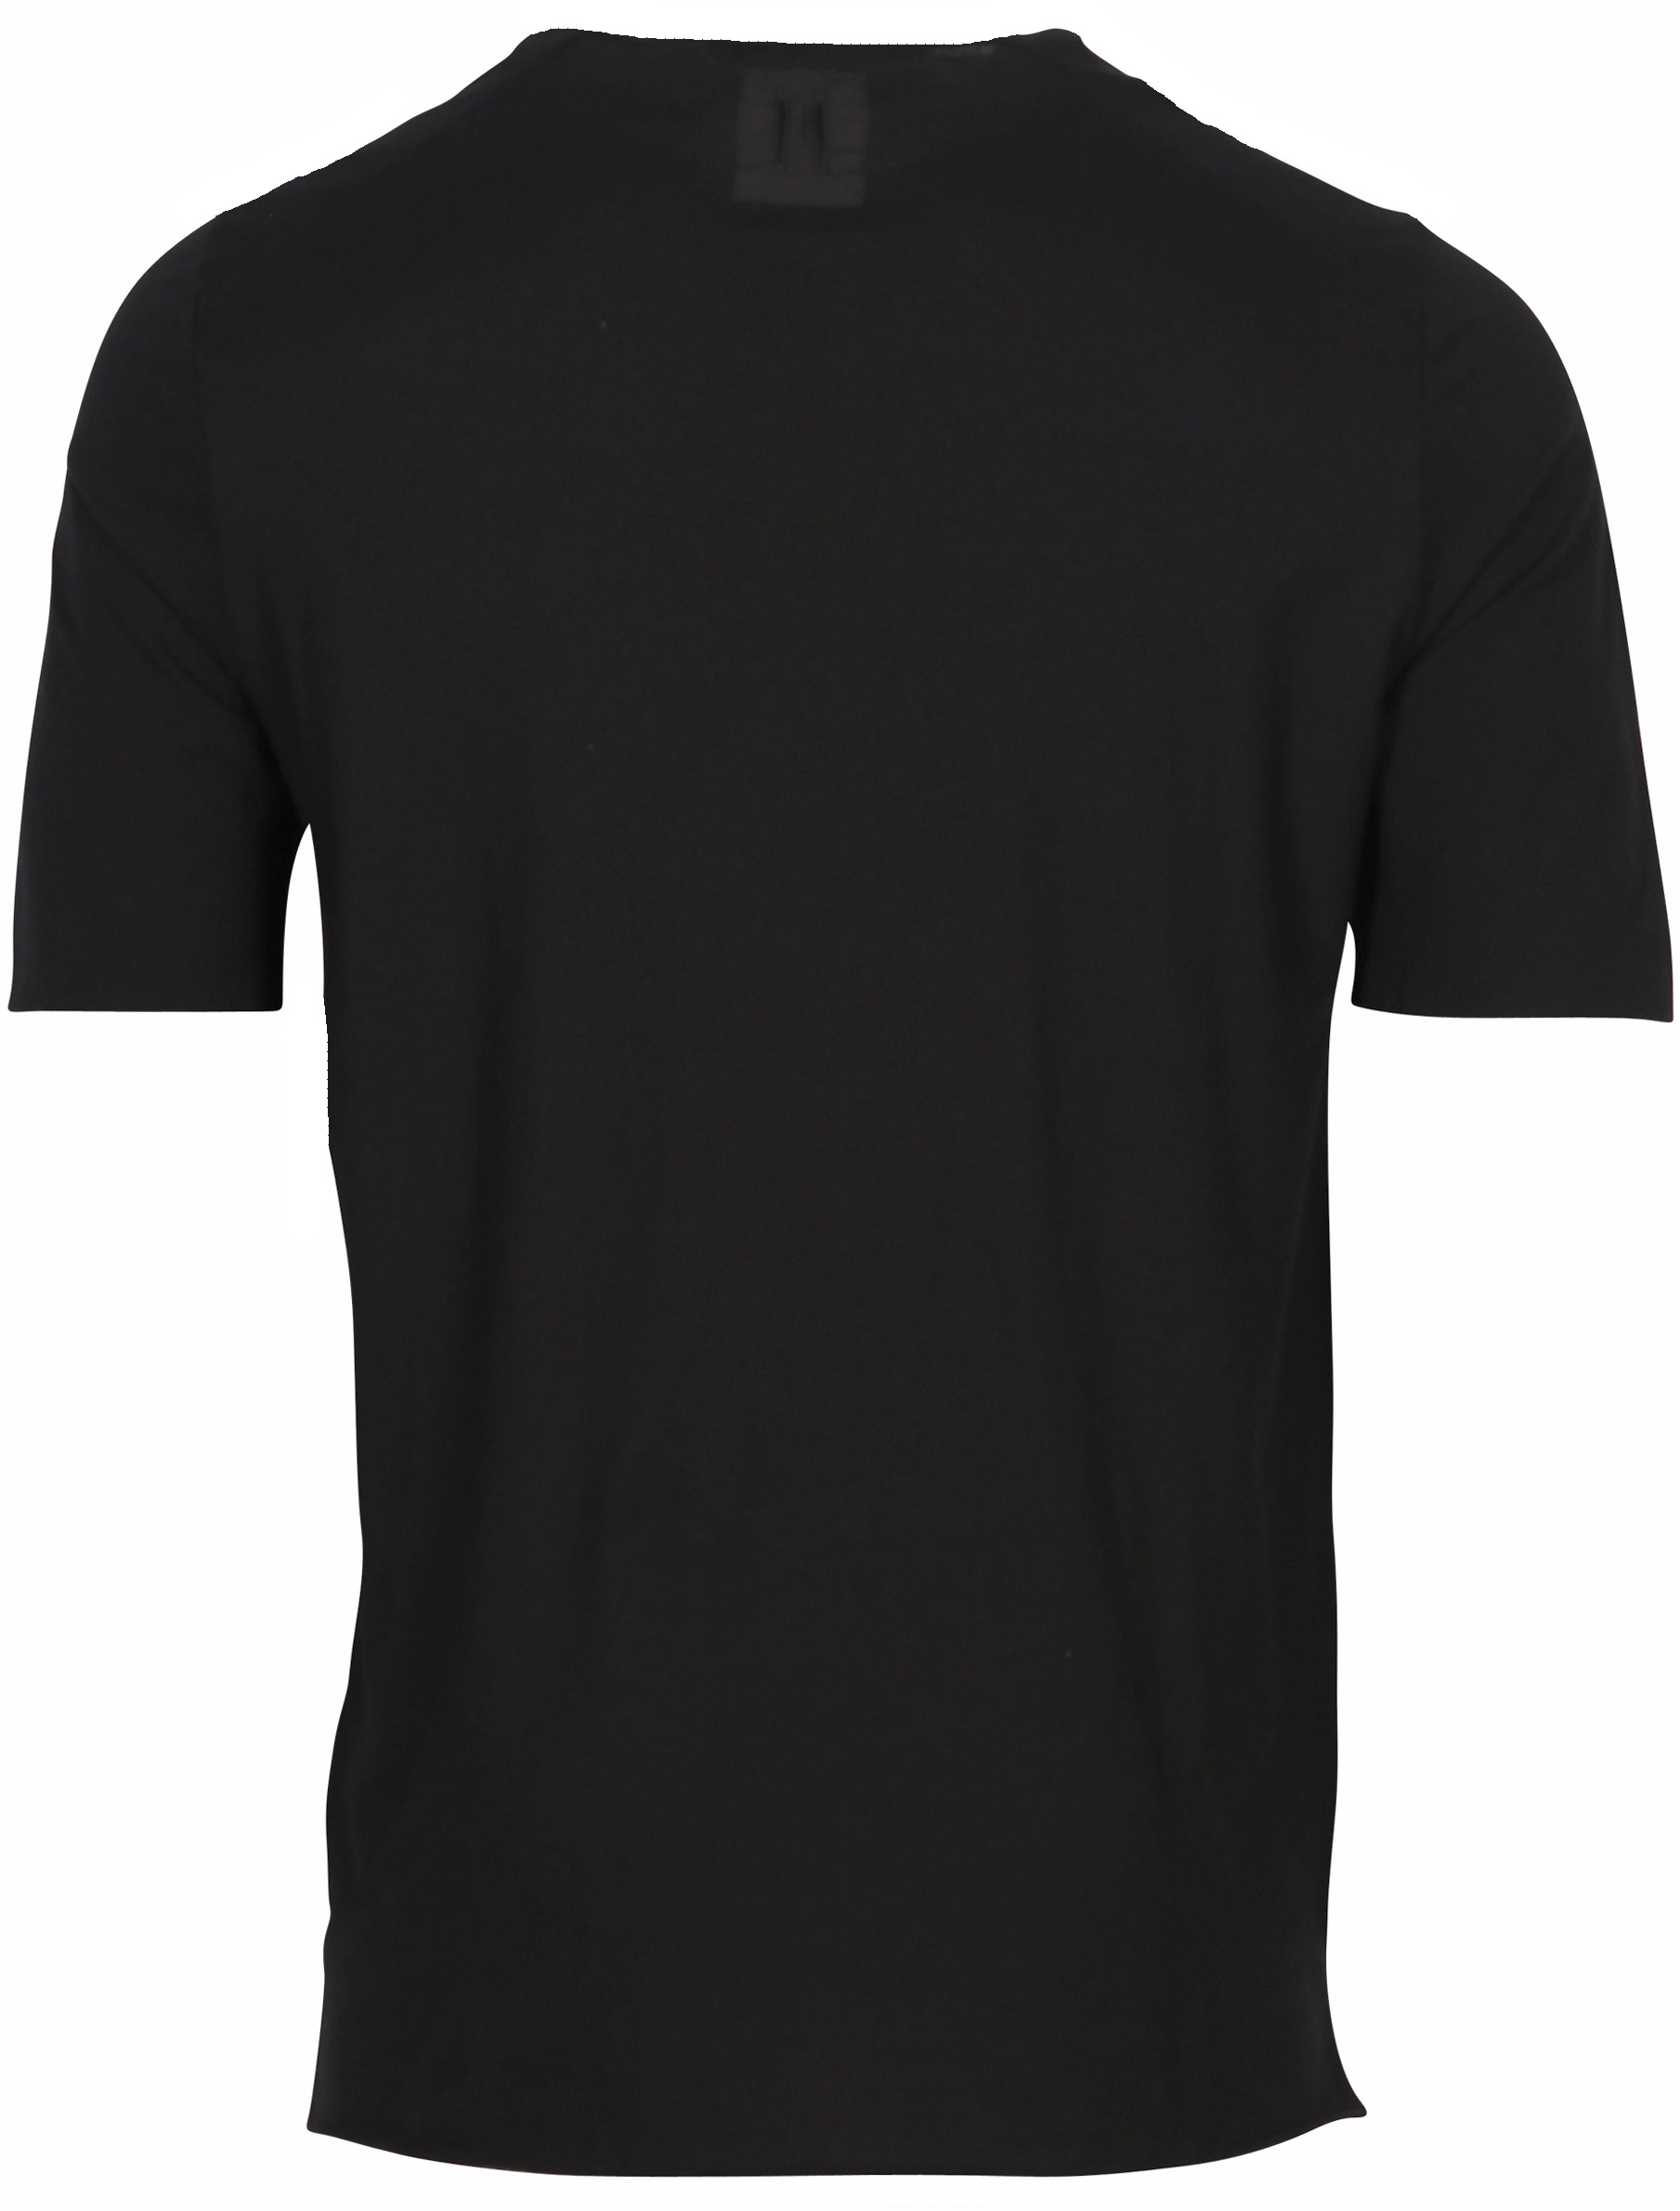 Hannes Roether T-Shirt Black M